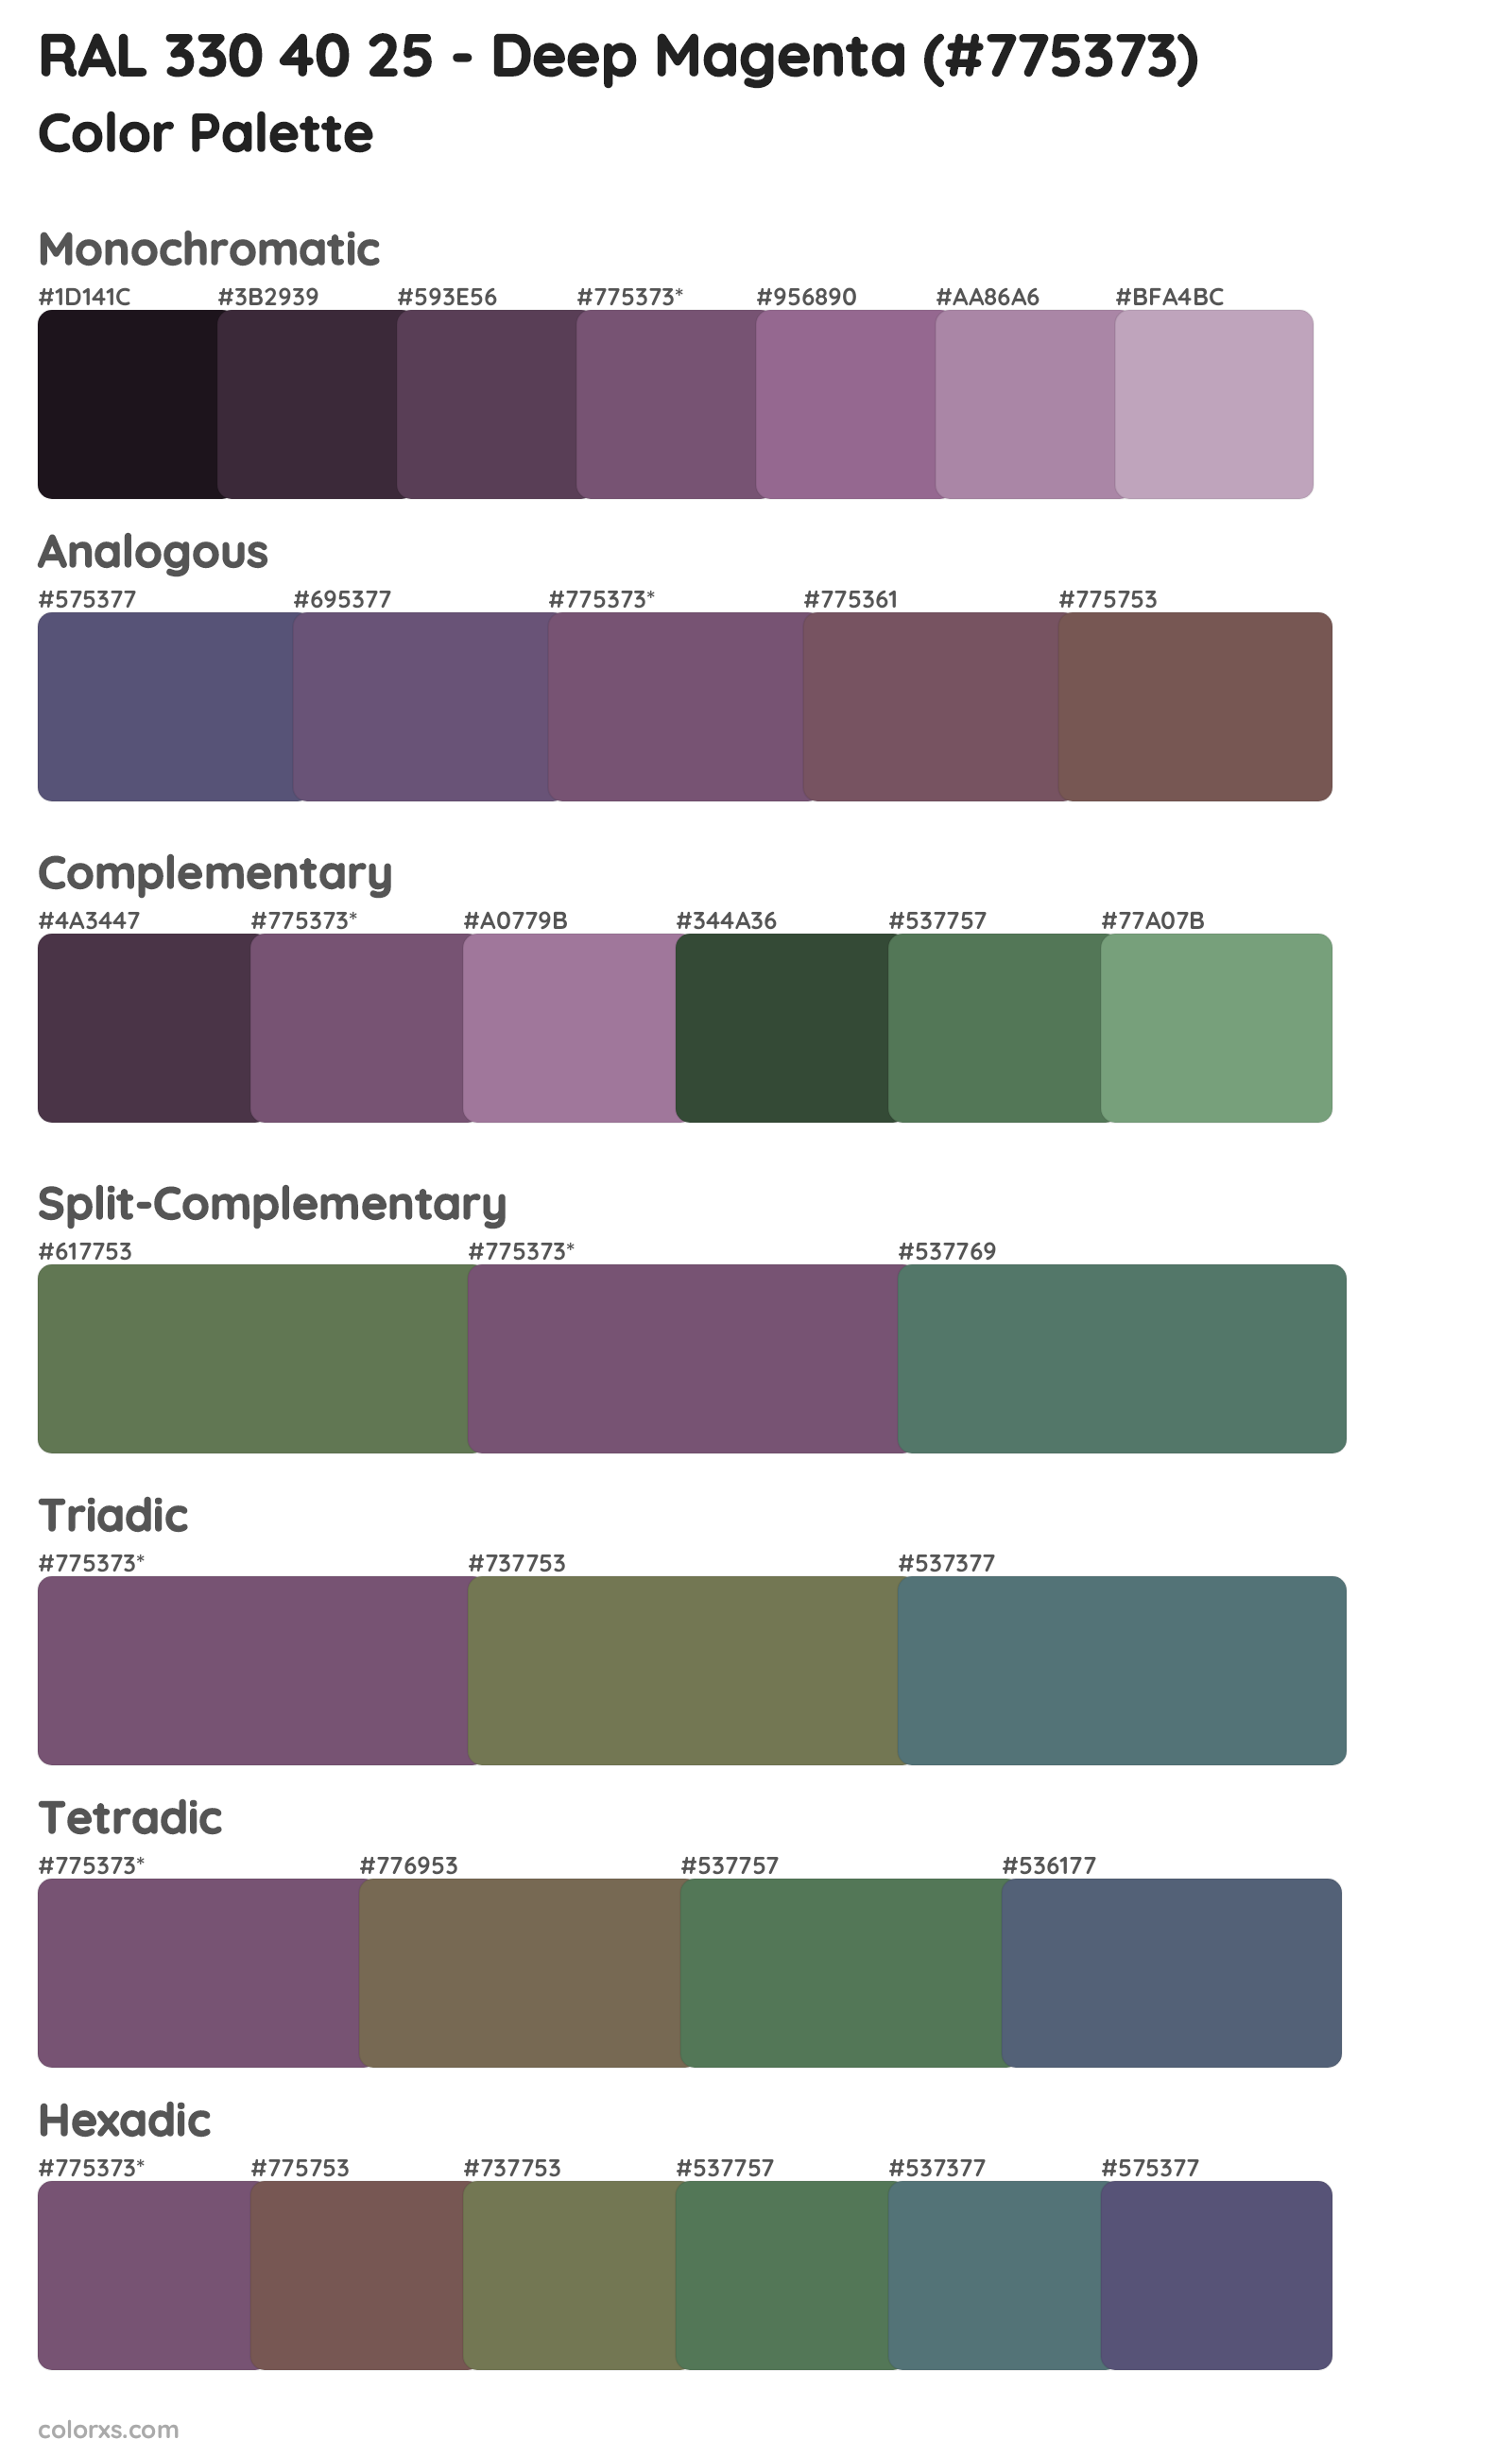 RAL 330 40 25 - Deep Magenta Color Scheme Palettes